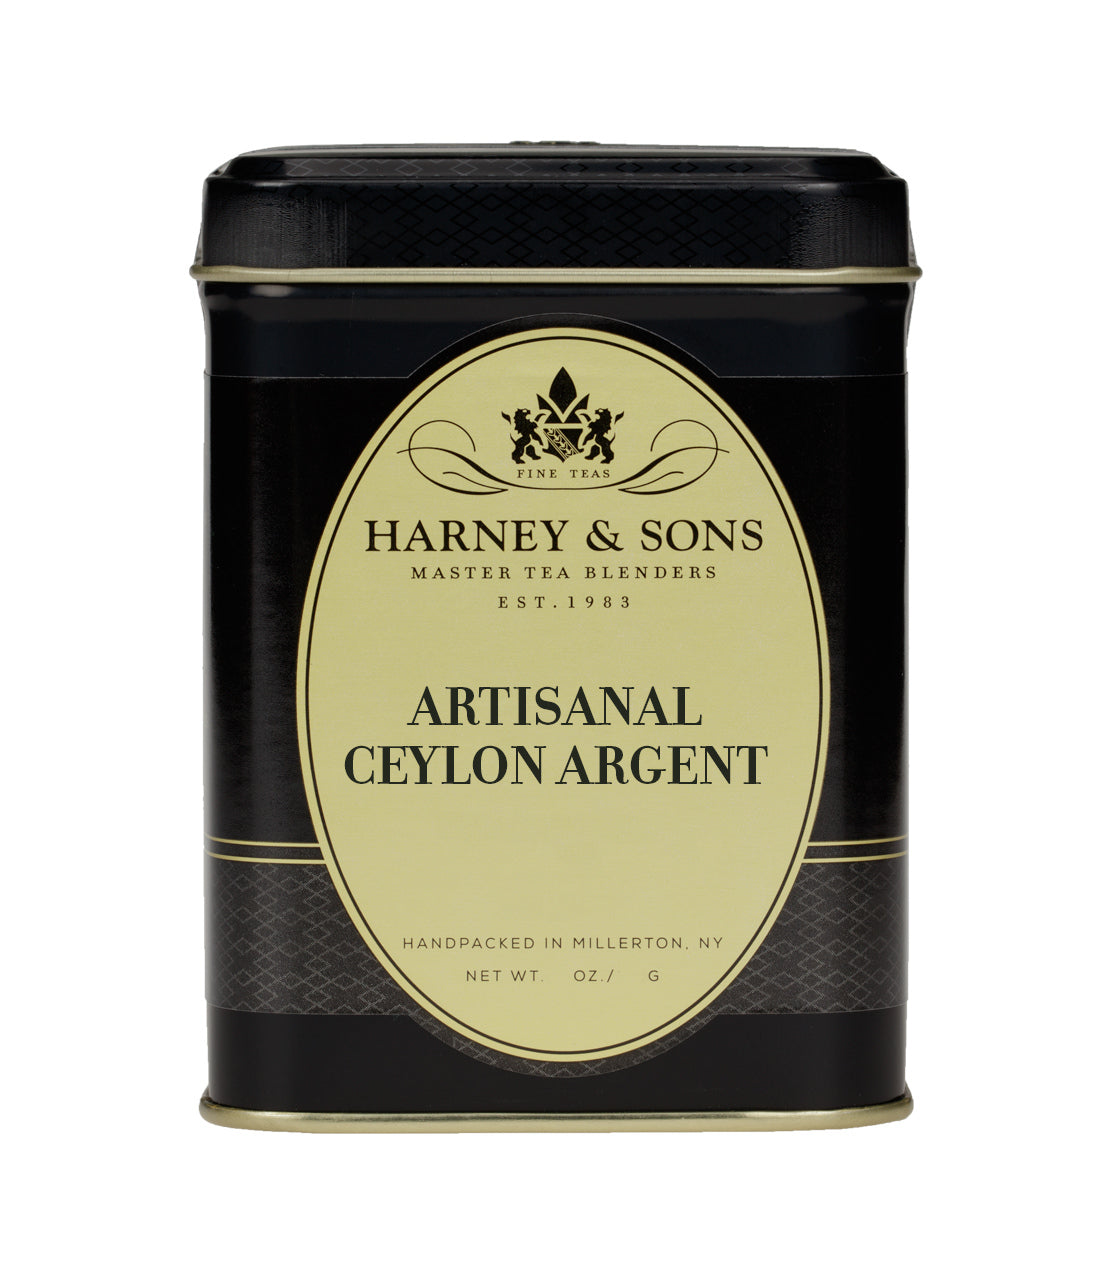 Artisanal Ceylon Argent